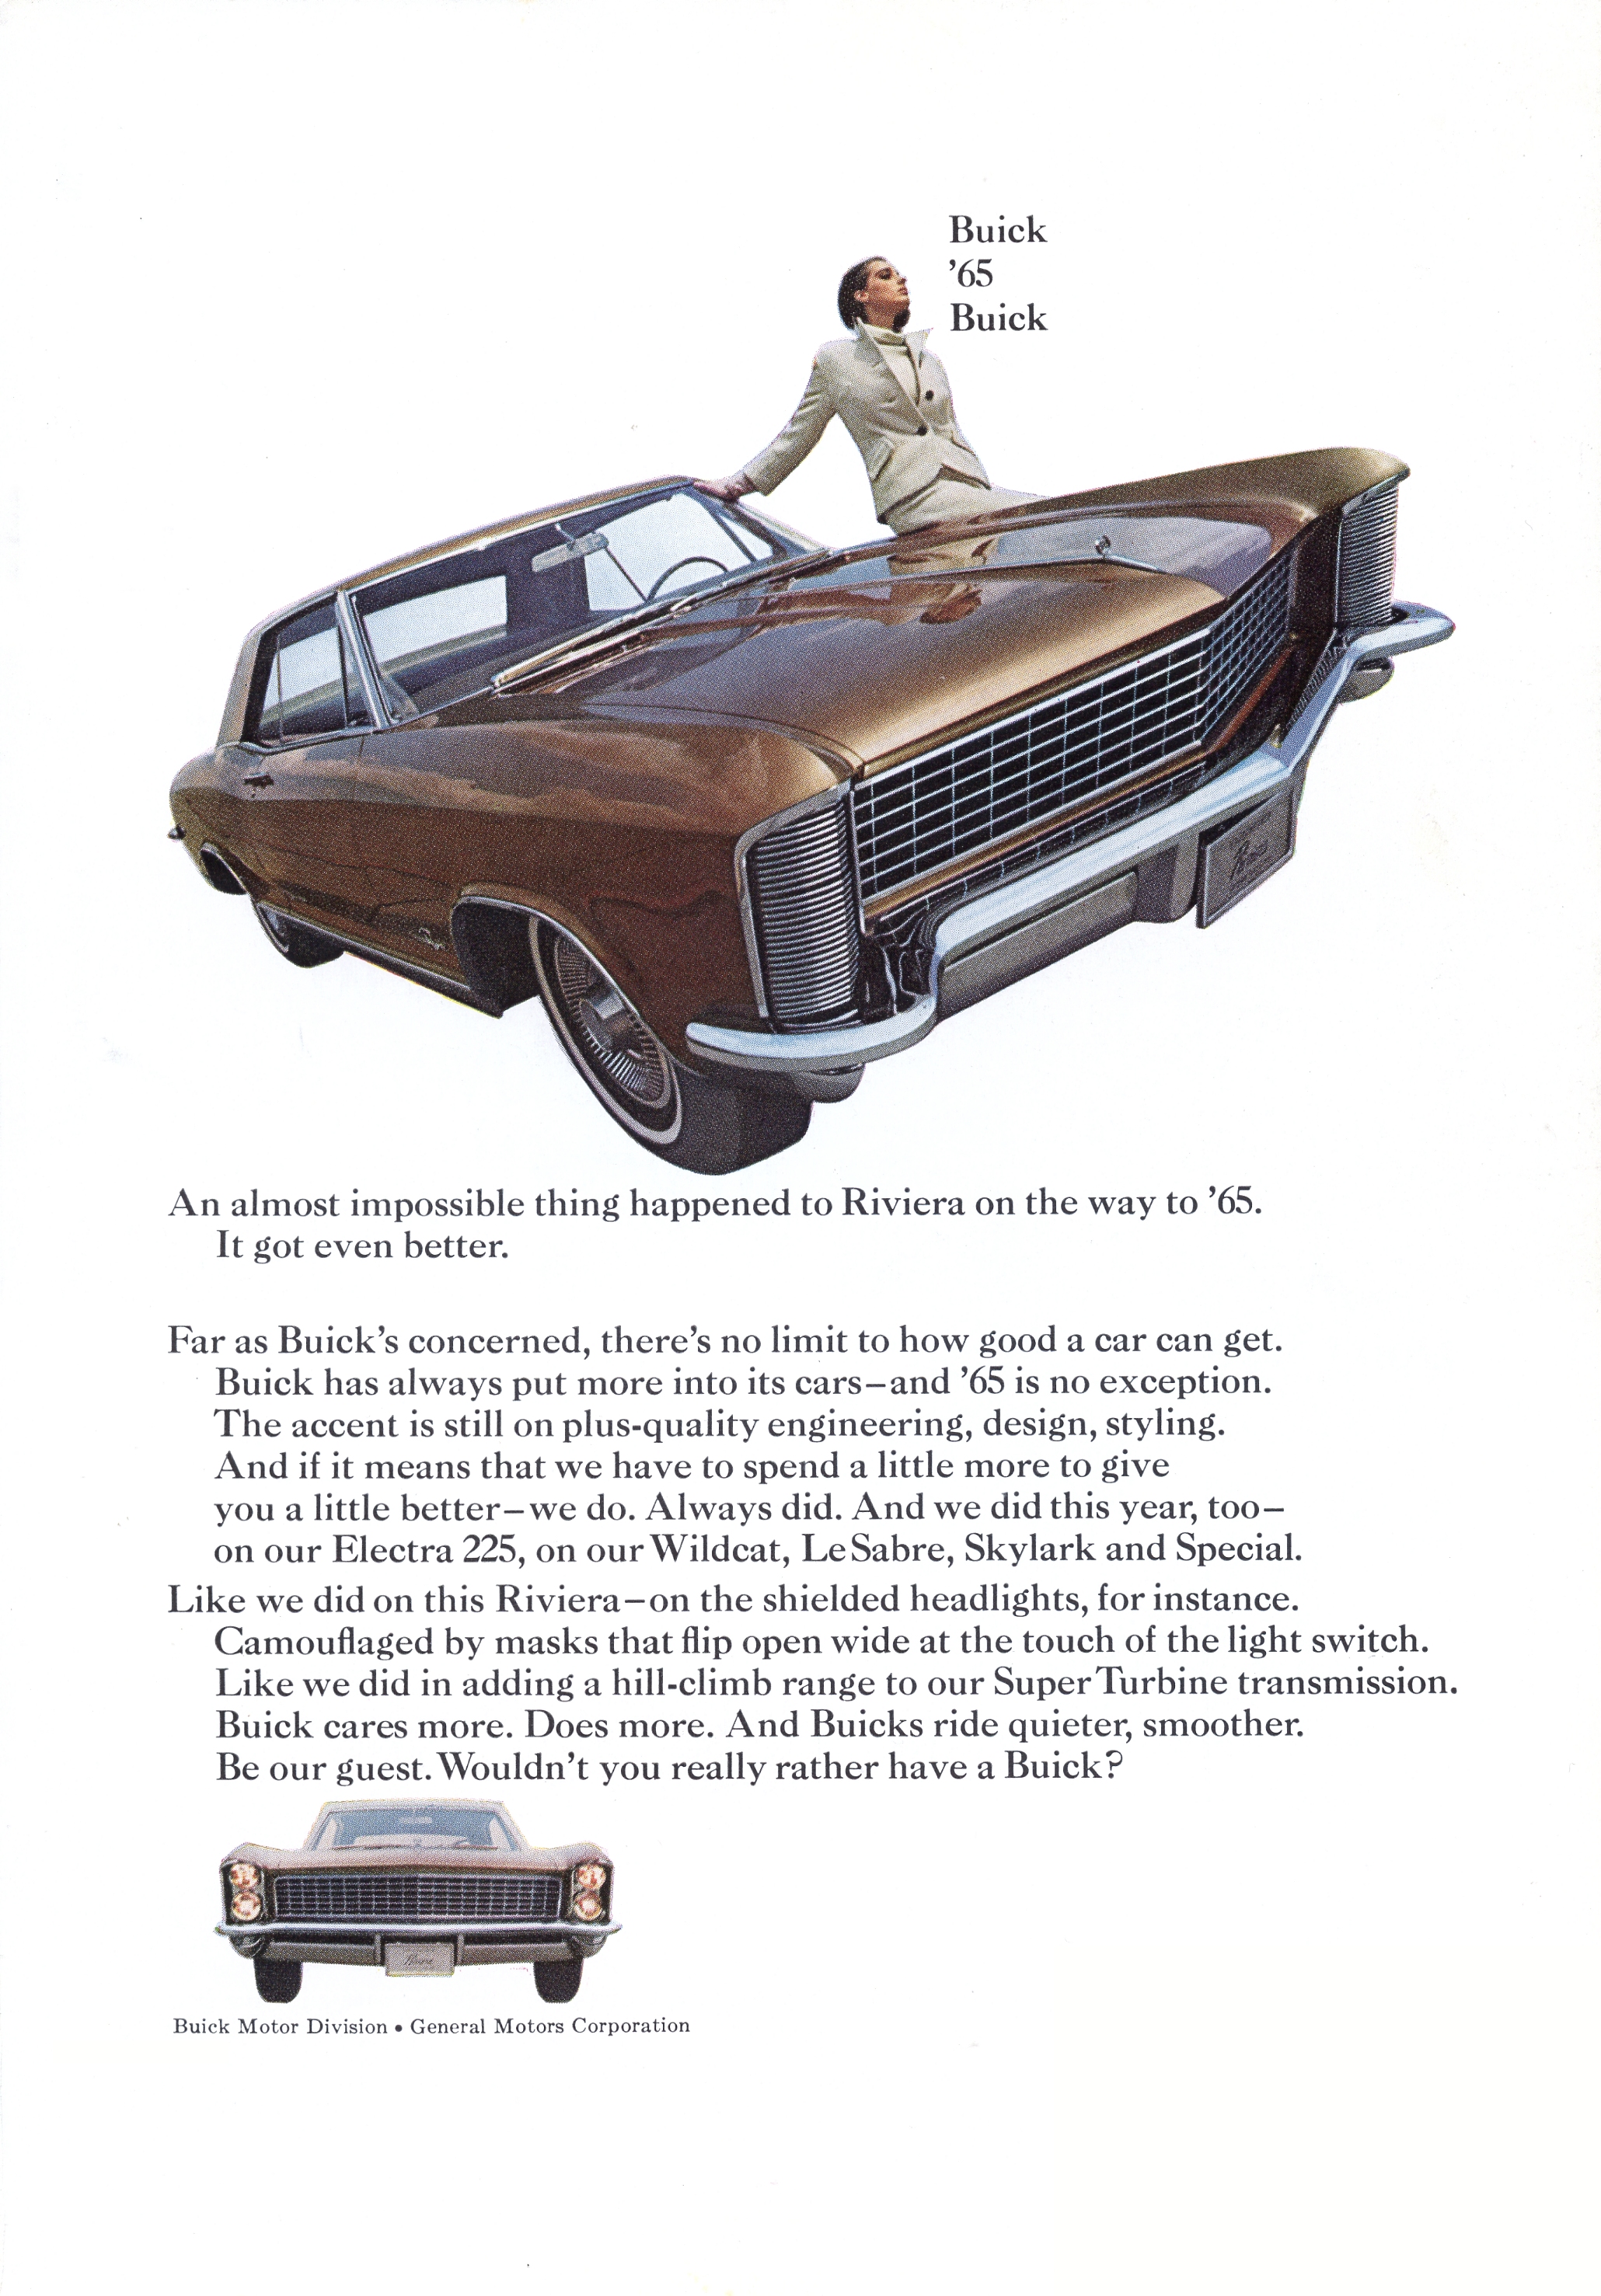 1965 Buick Ad-08